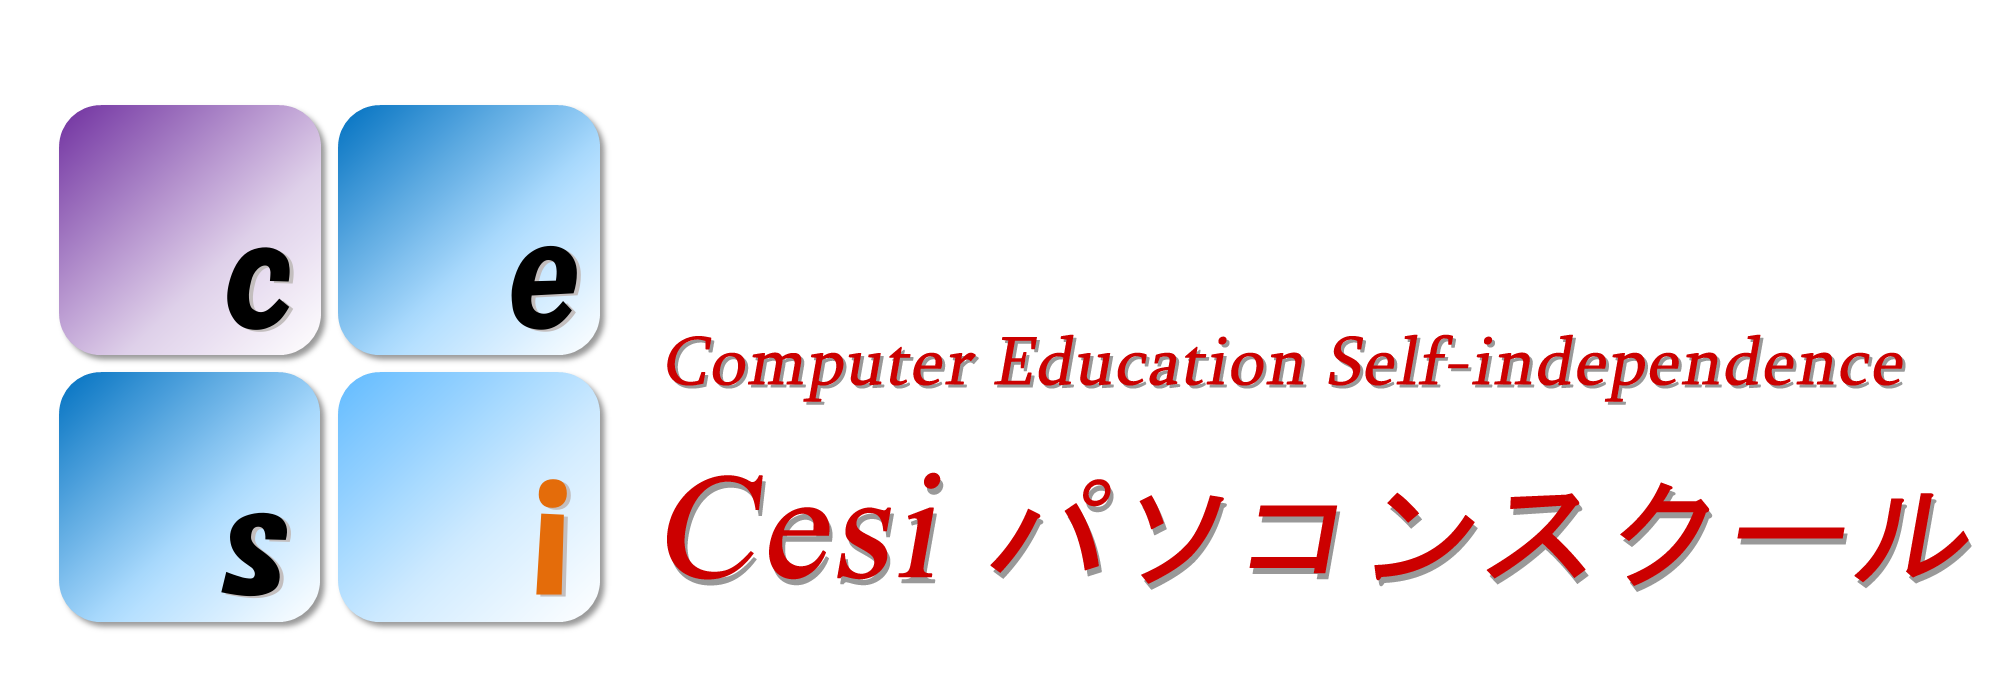 cesiパソコンスクール